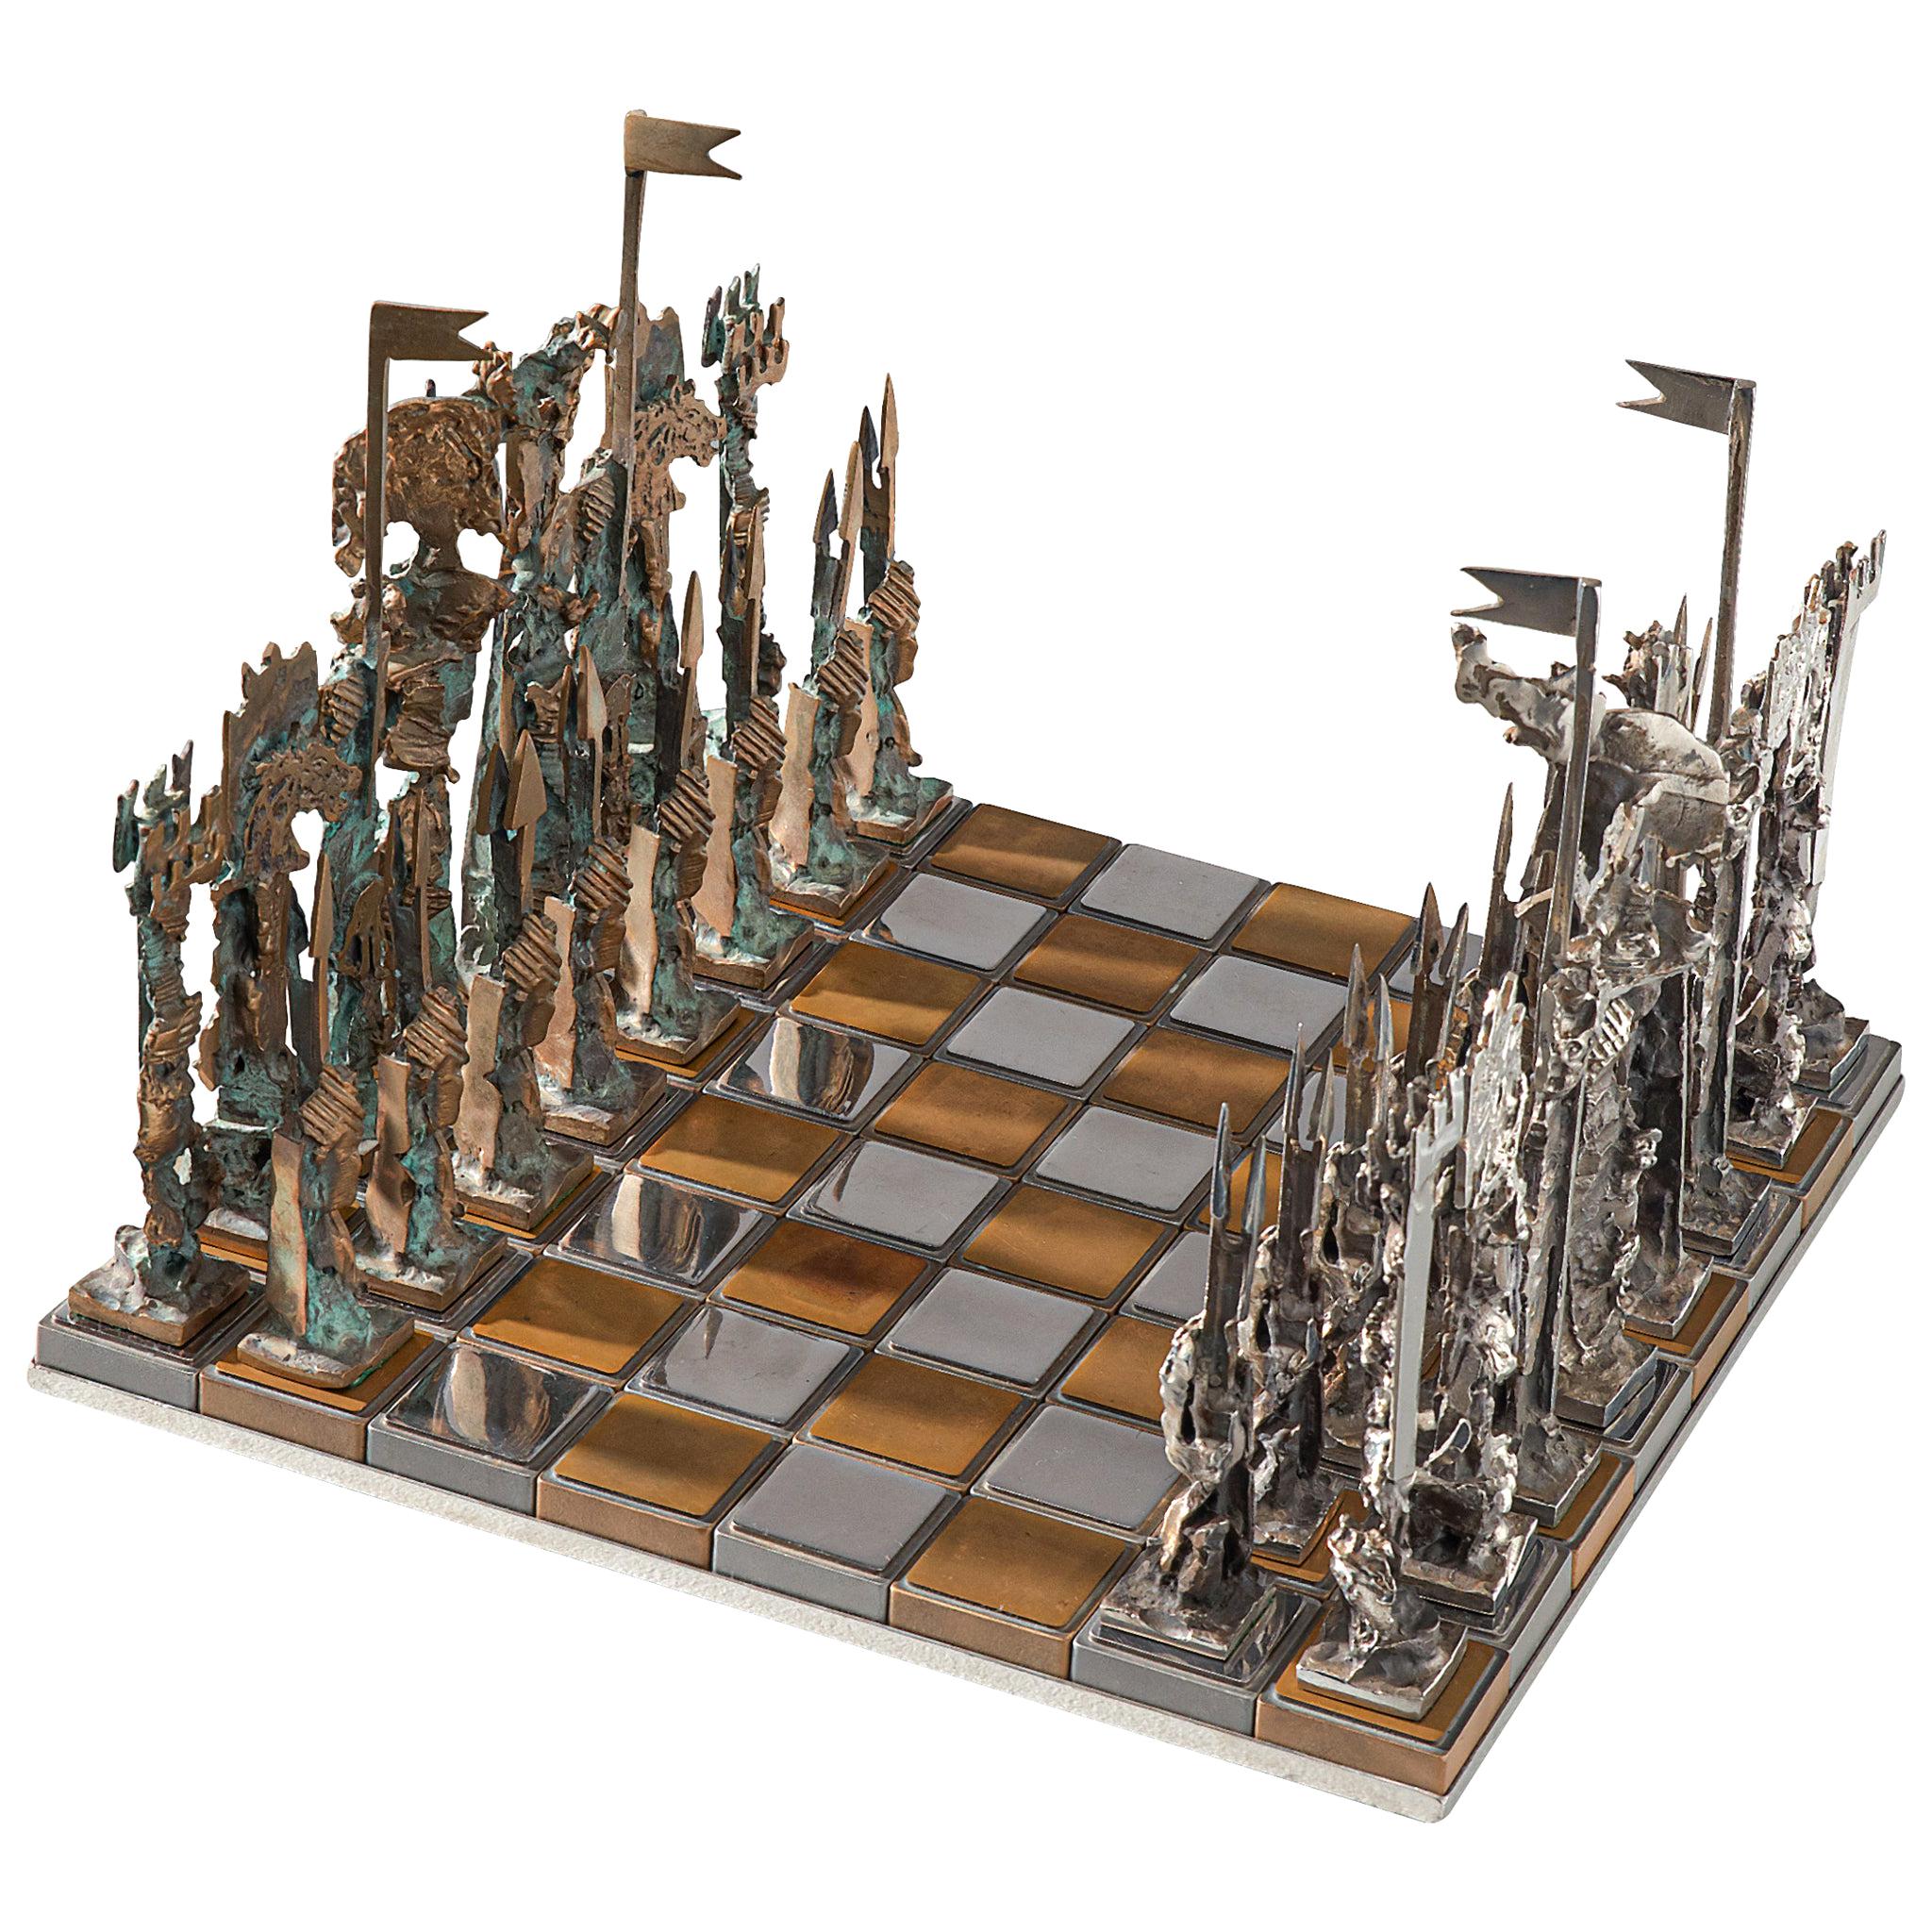 Jeu d'échecs italien sculptural en métal et verre  en vente